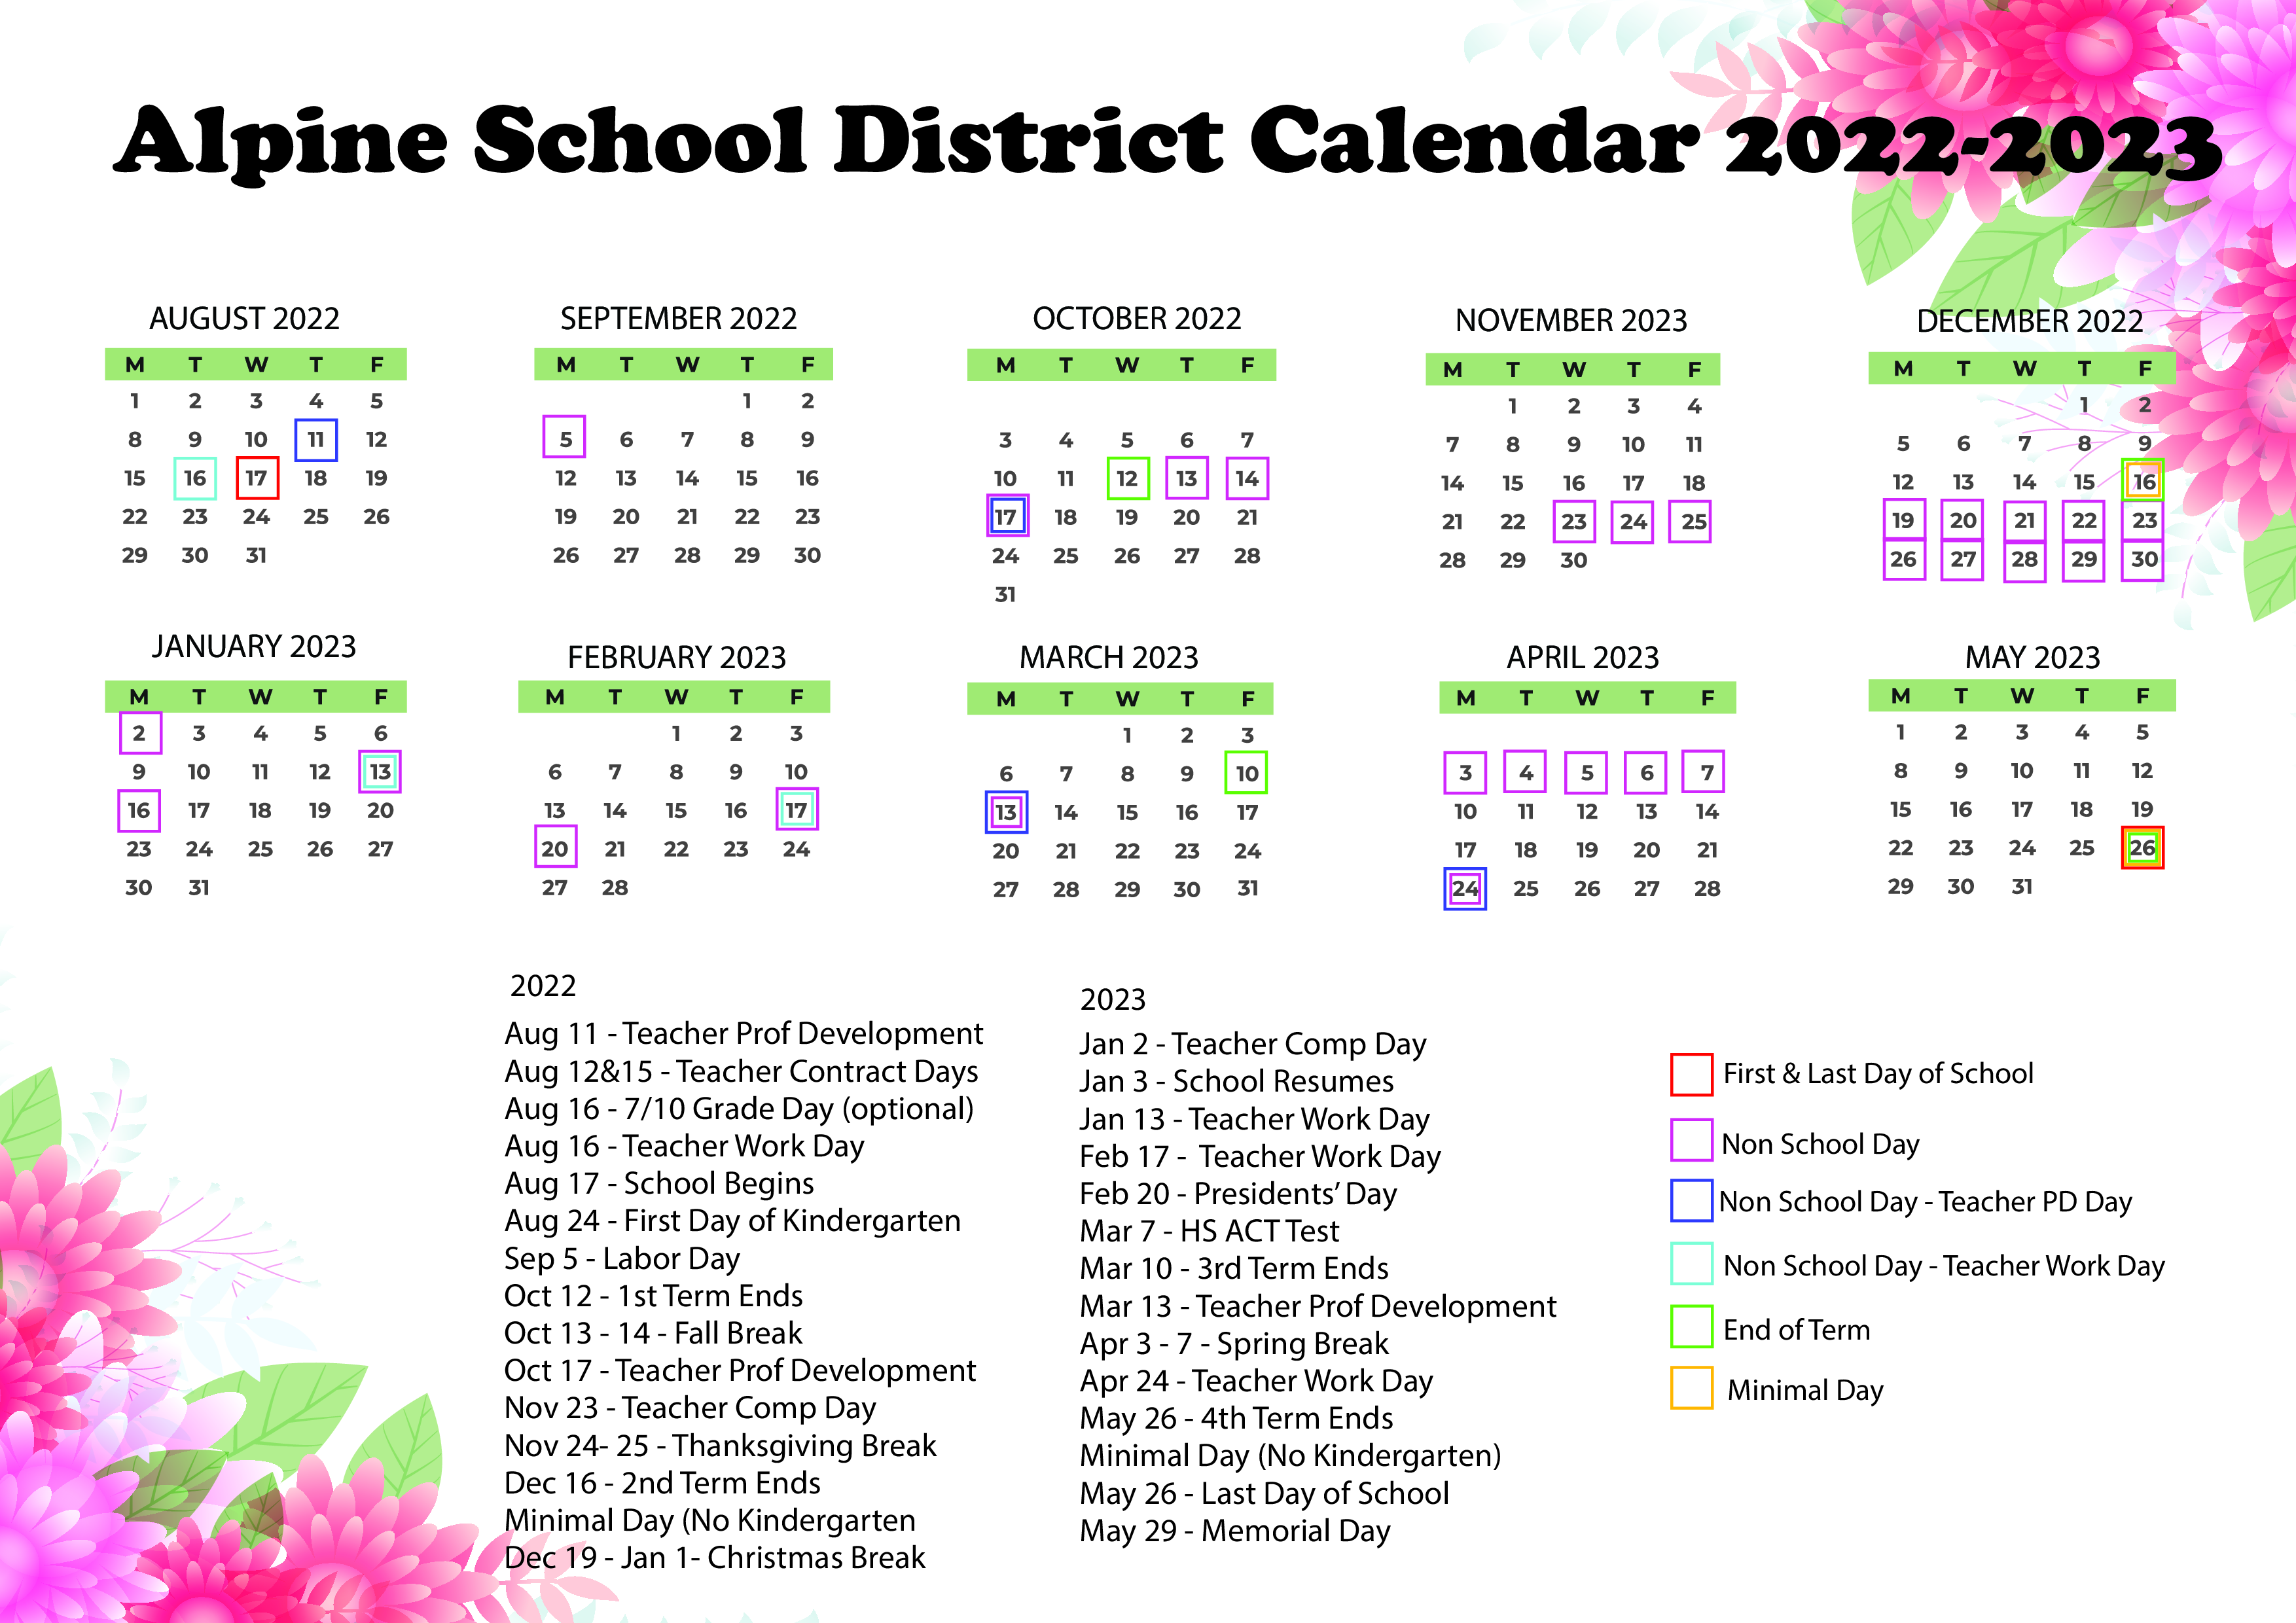 Alpine School District Calendar with Holidays 20222023